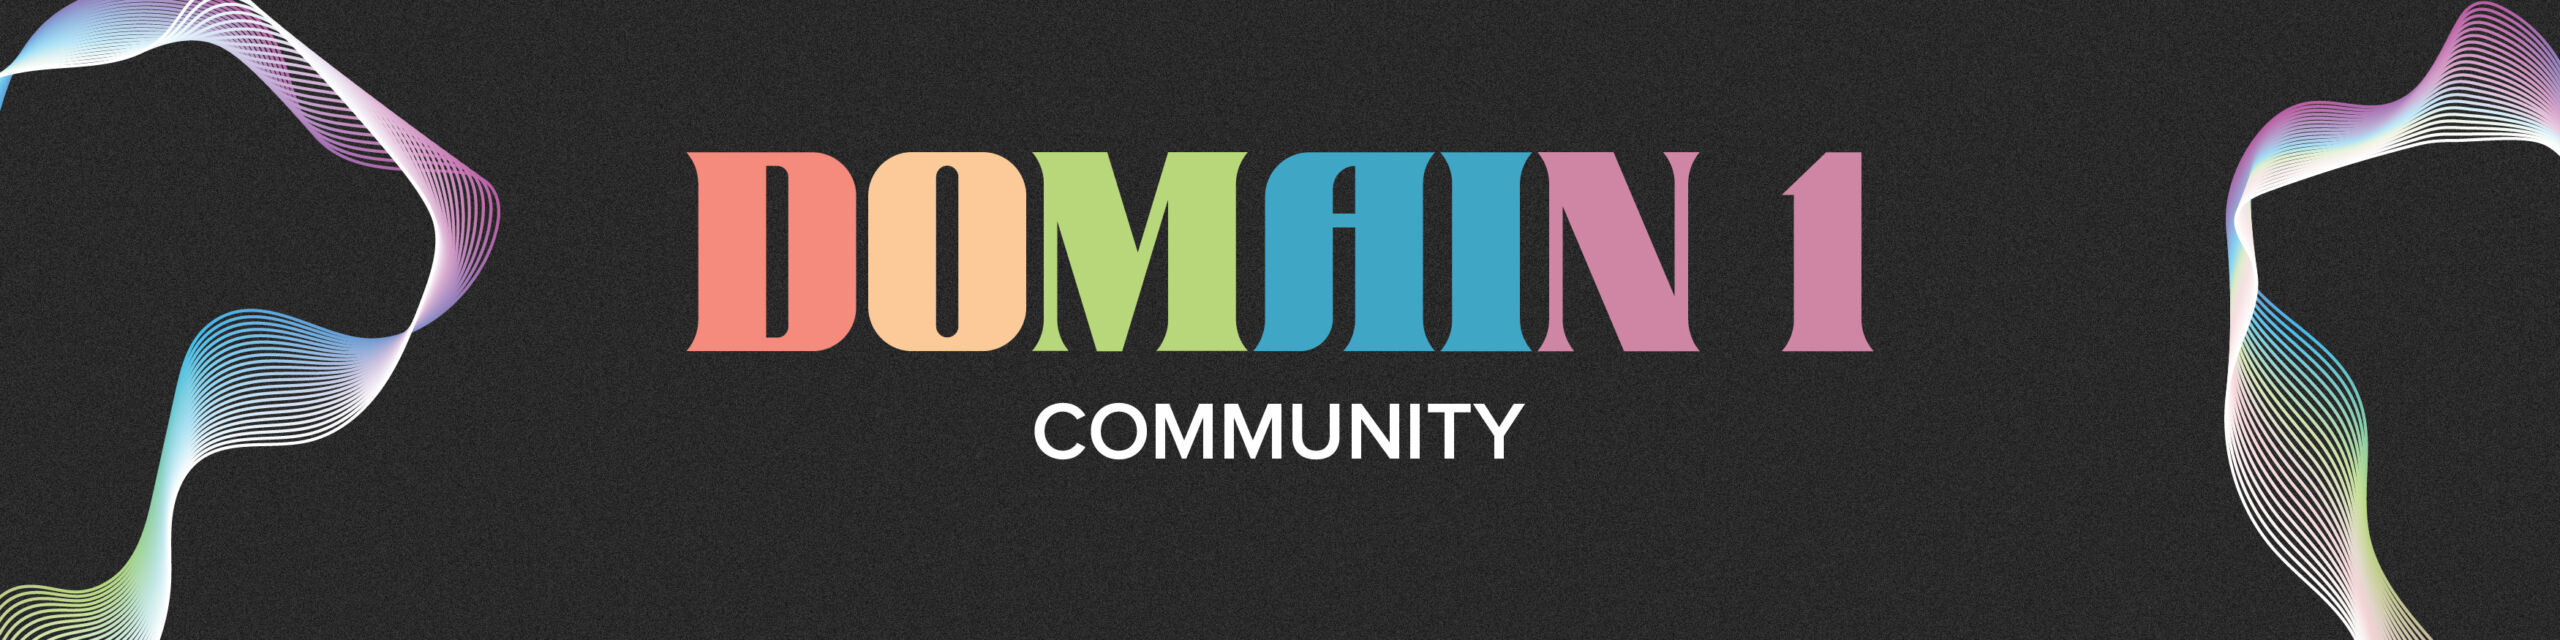 domain 1 - community